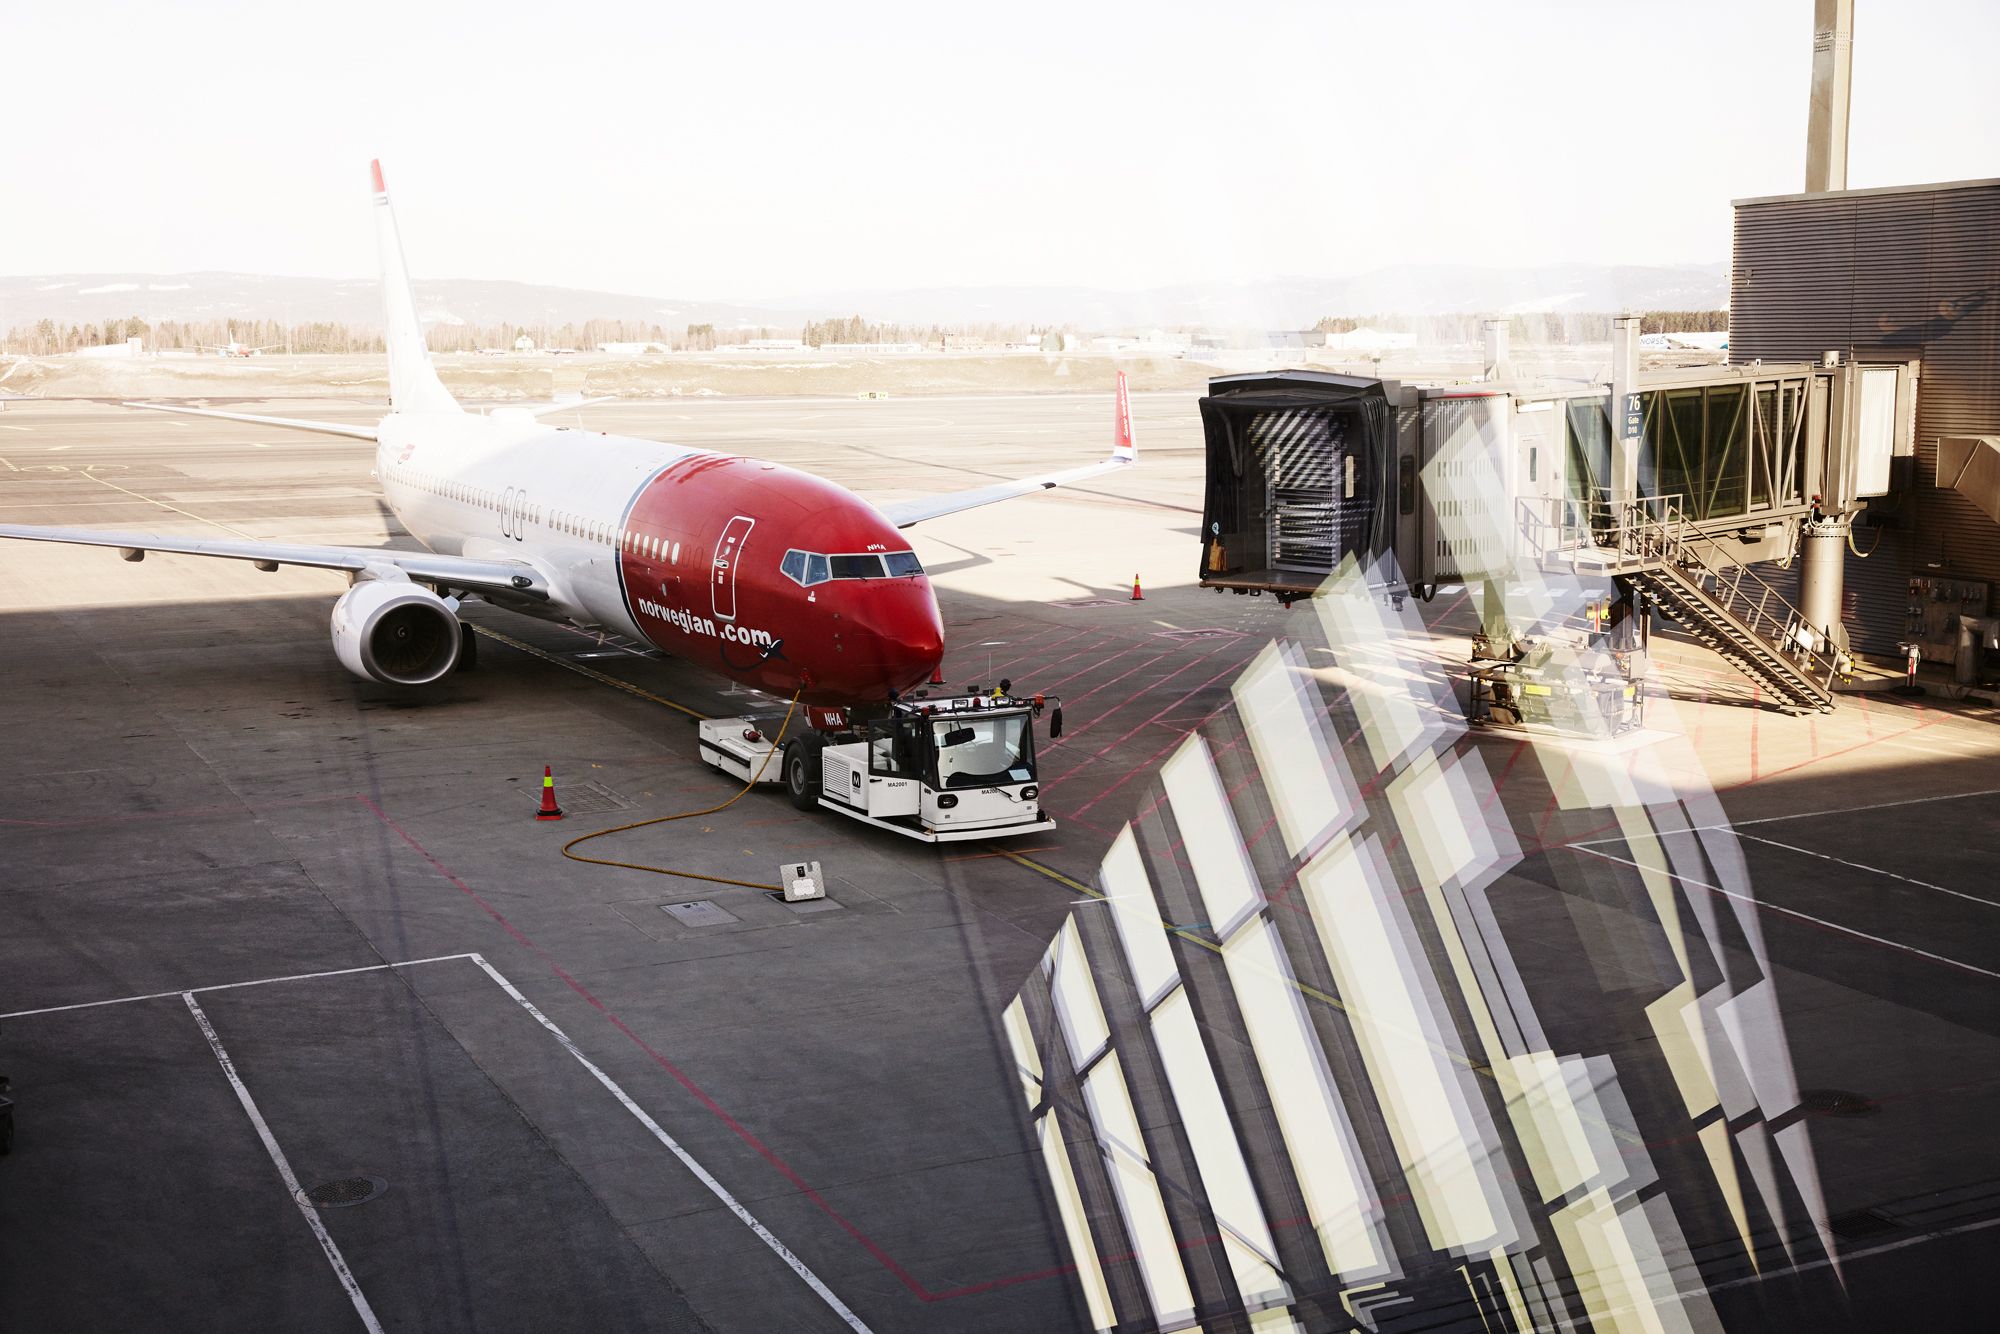 Norwegian aircraft at airport gate